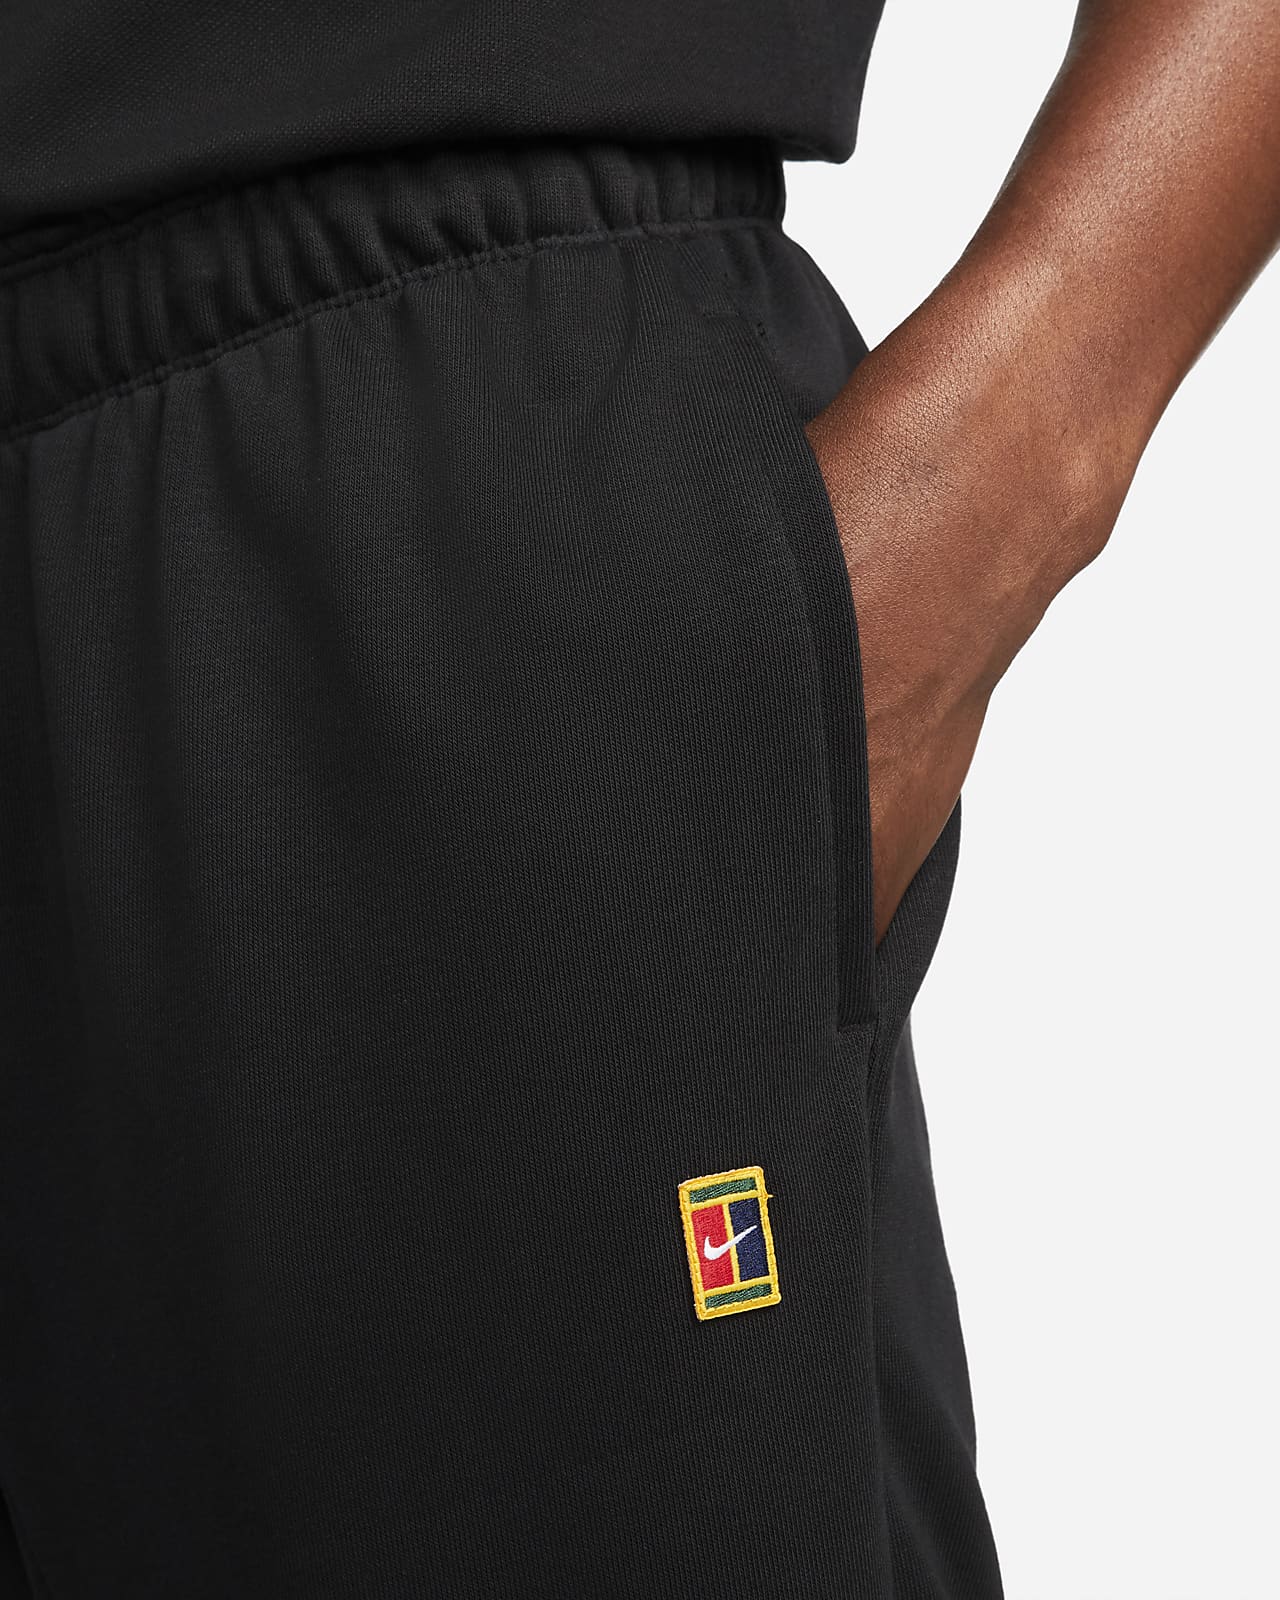 Nike Men's NikeCourt Heritage Tennis Pants Bright Spruce Sz Large DC0621-367